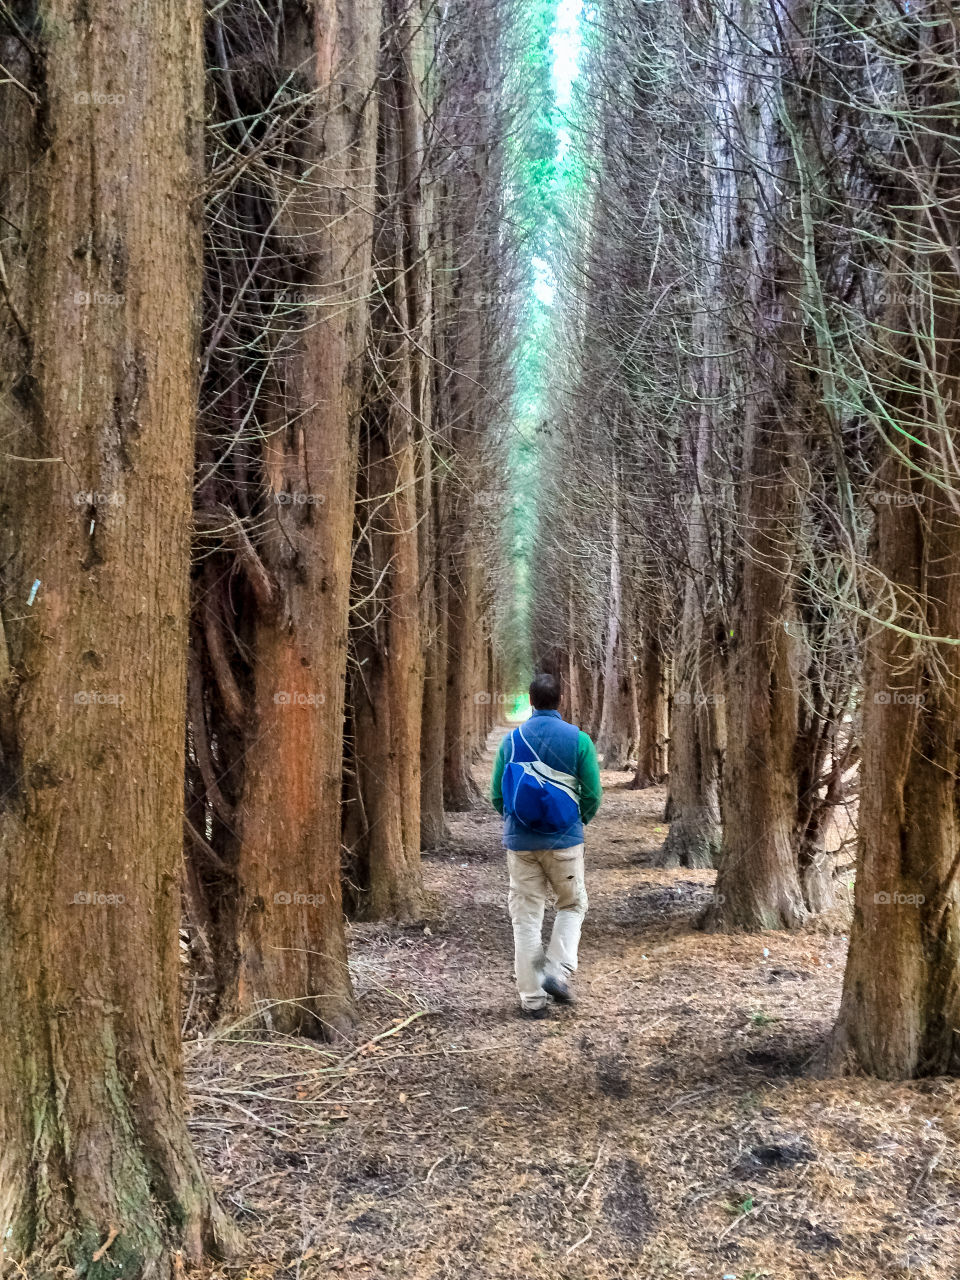 A man takes a morning walk through a corridor of tall  pine trees